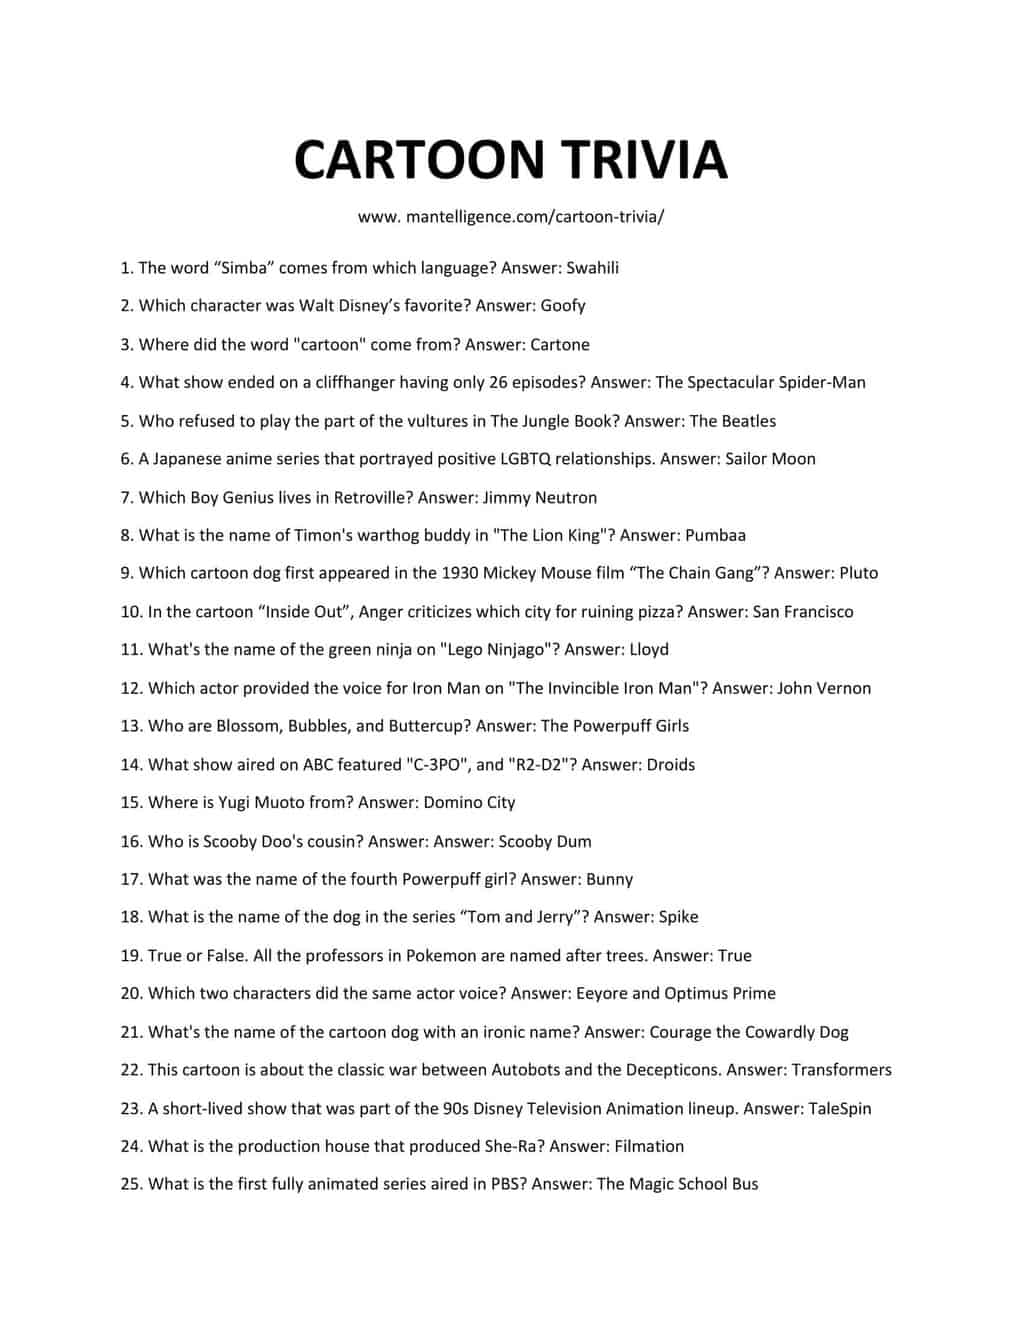 Downloadable and Printable List of Cartoon Trivia as jpg or pdf